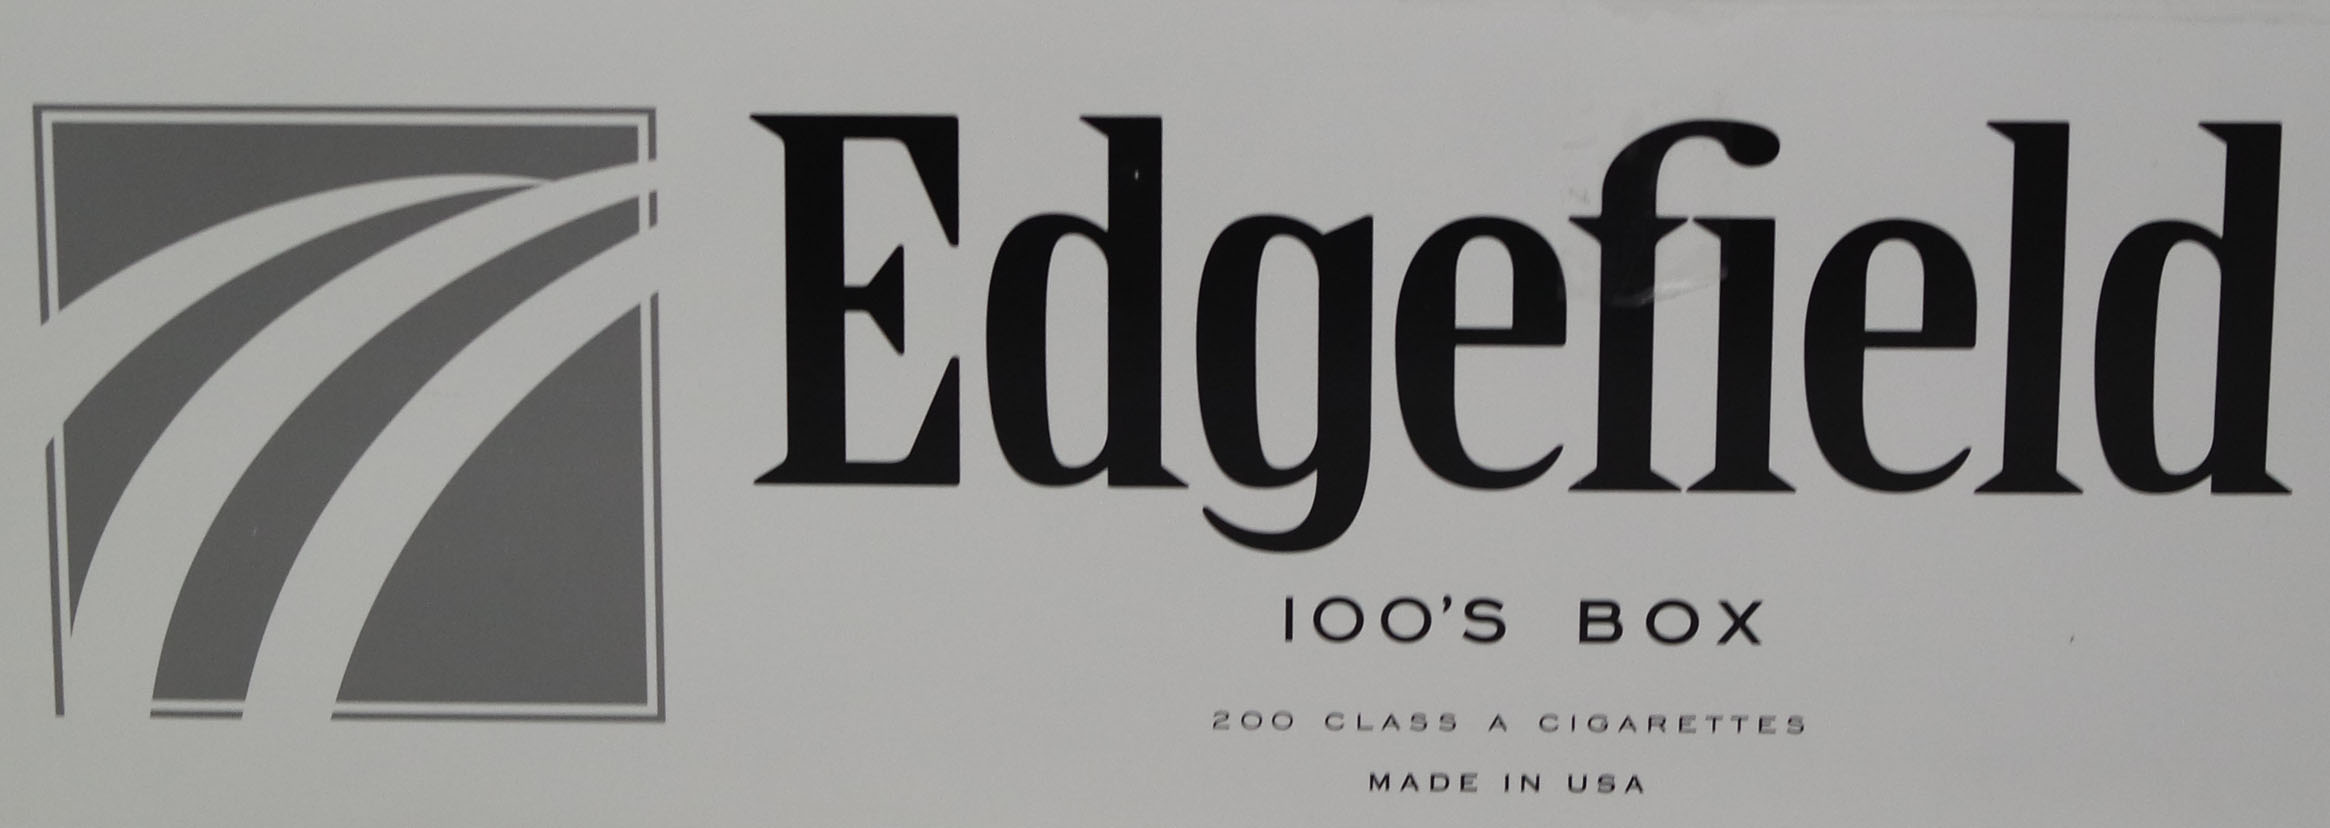 Edgefield silver 100box